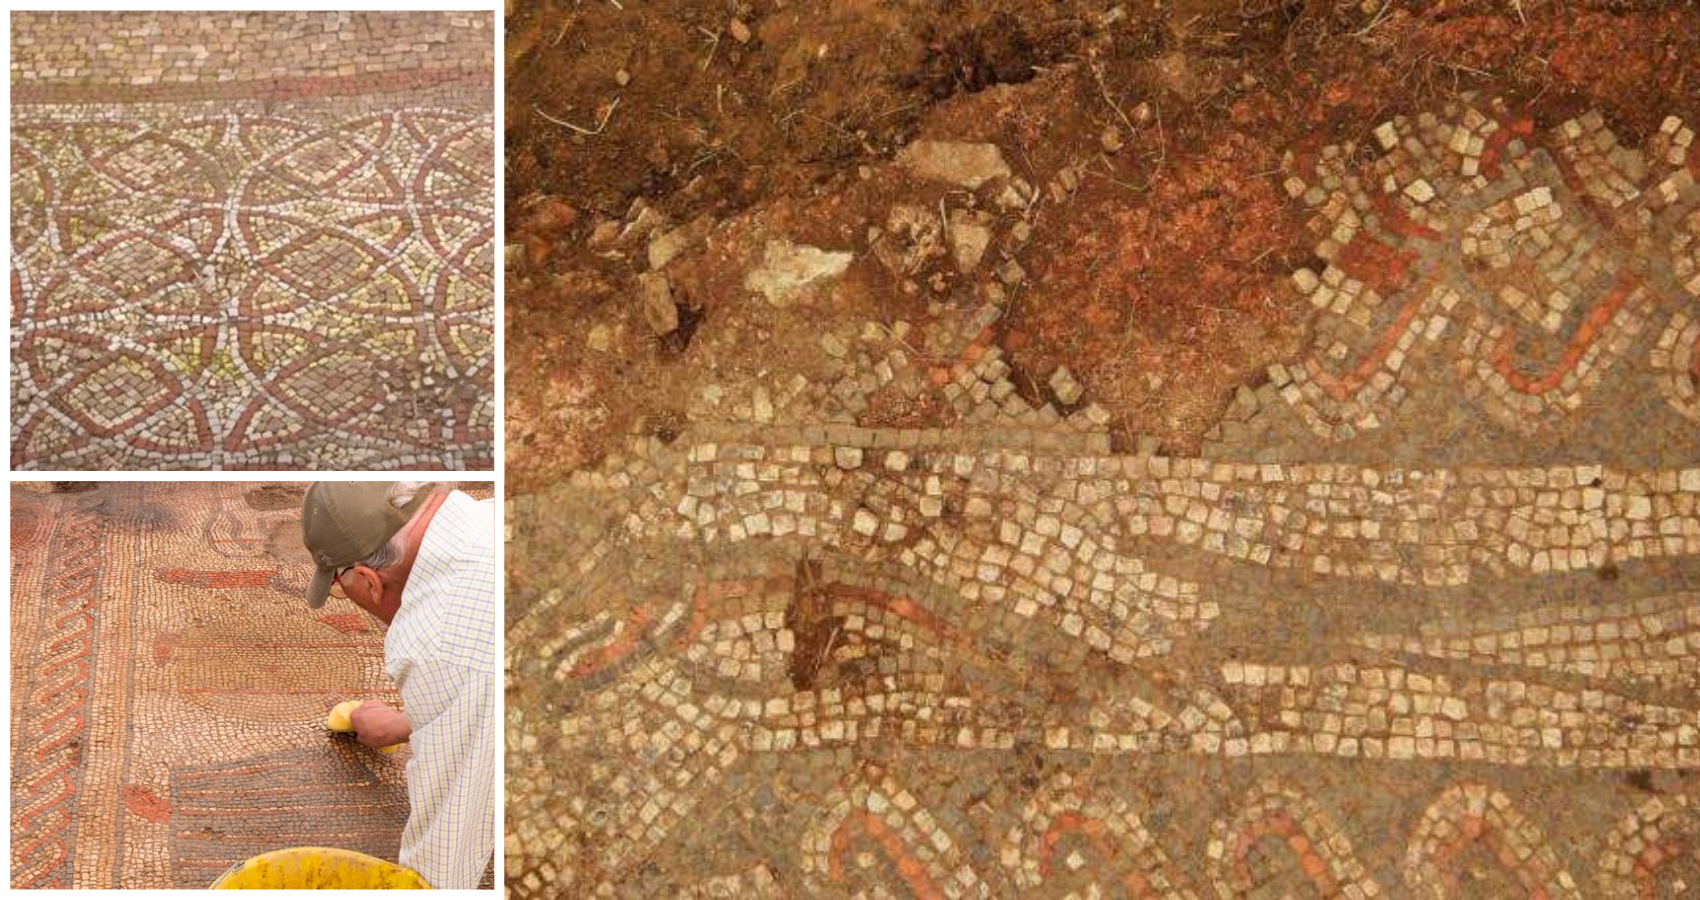 Lufton Villa excavations reveal new details about famous fish mosaic